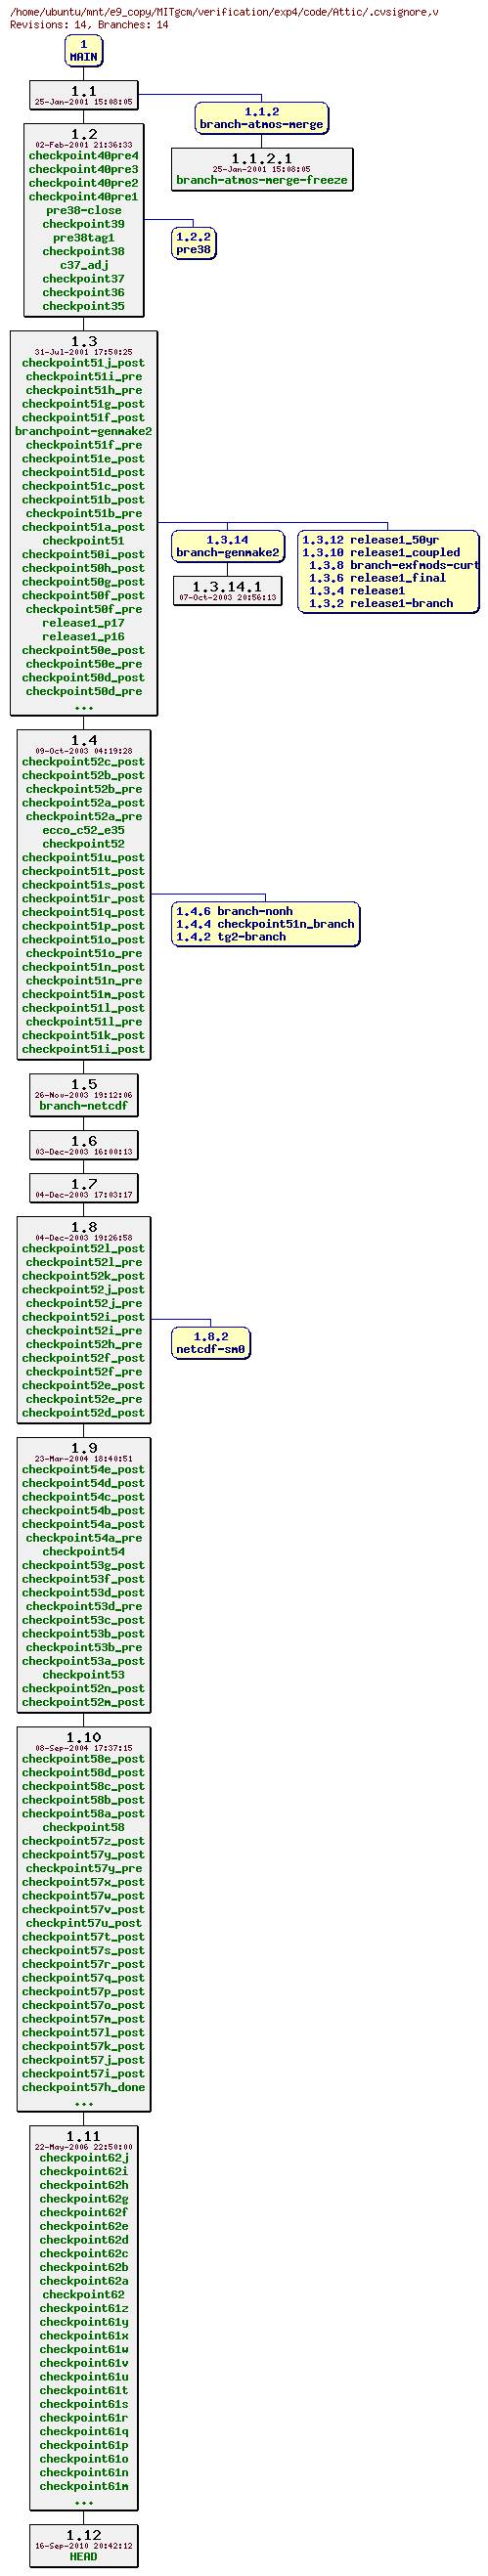 Revisions of MITgcm/verification/exp4/code/.cvsignore